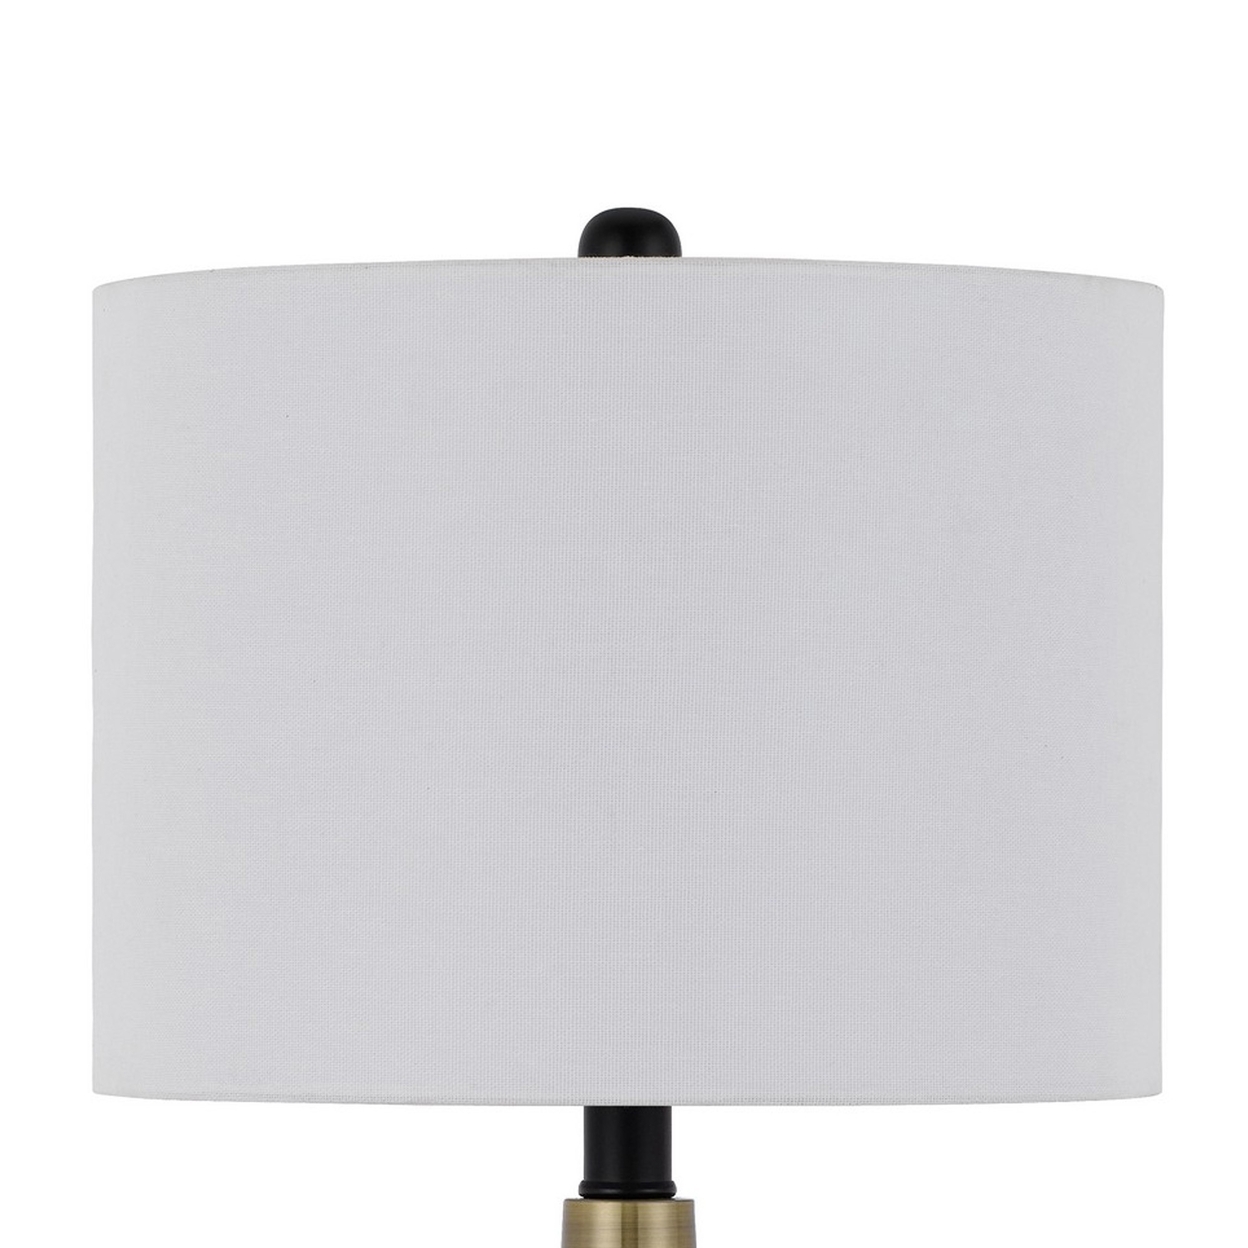 23 Inch Pear Shaped Table Lamp, Set Of 2, Fabric Cylinder Shade, Black, Gold- Saltoro Sherpi